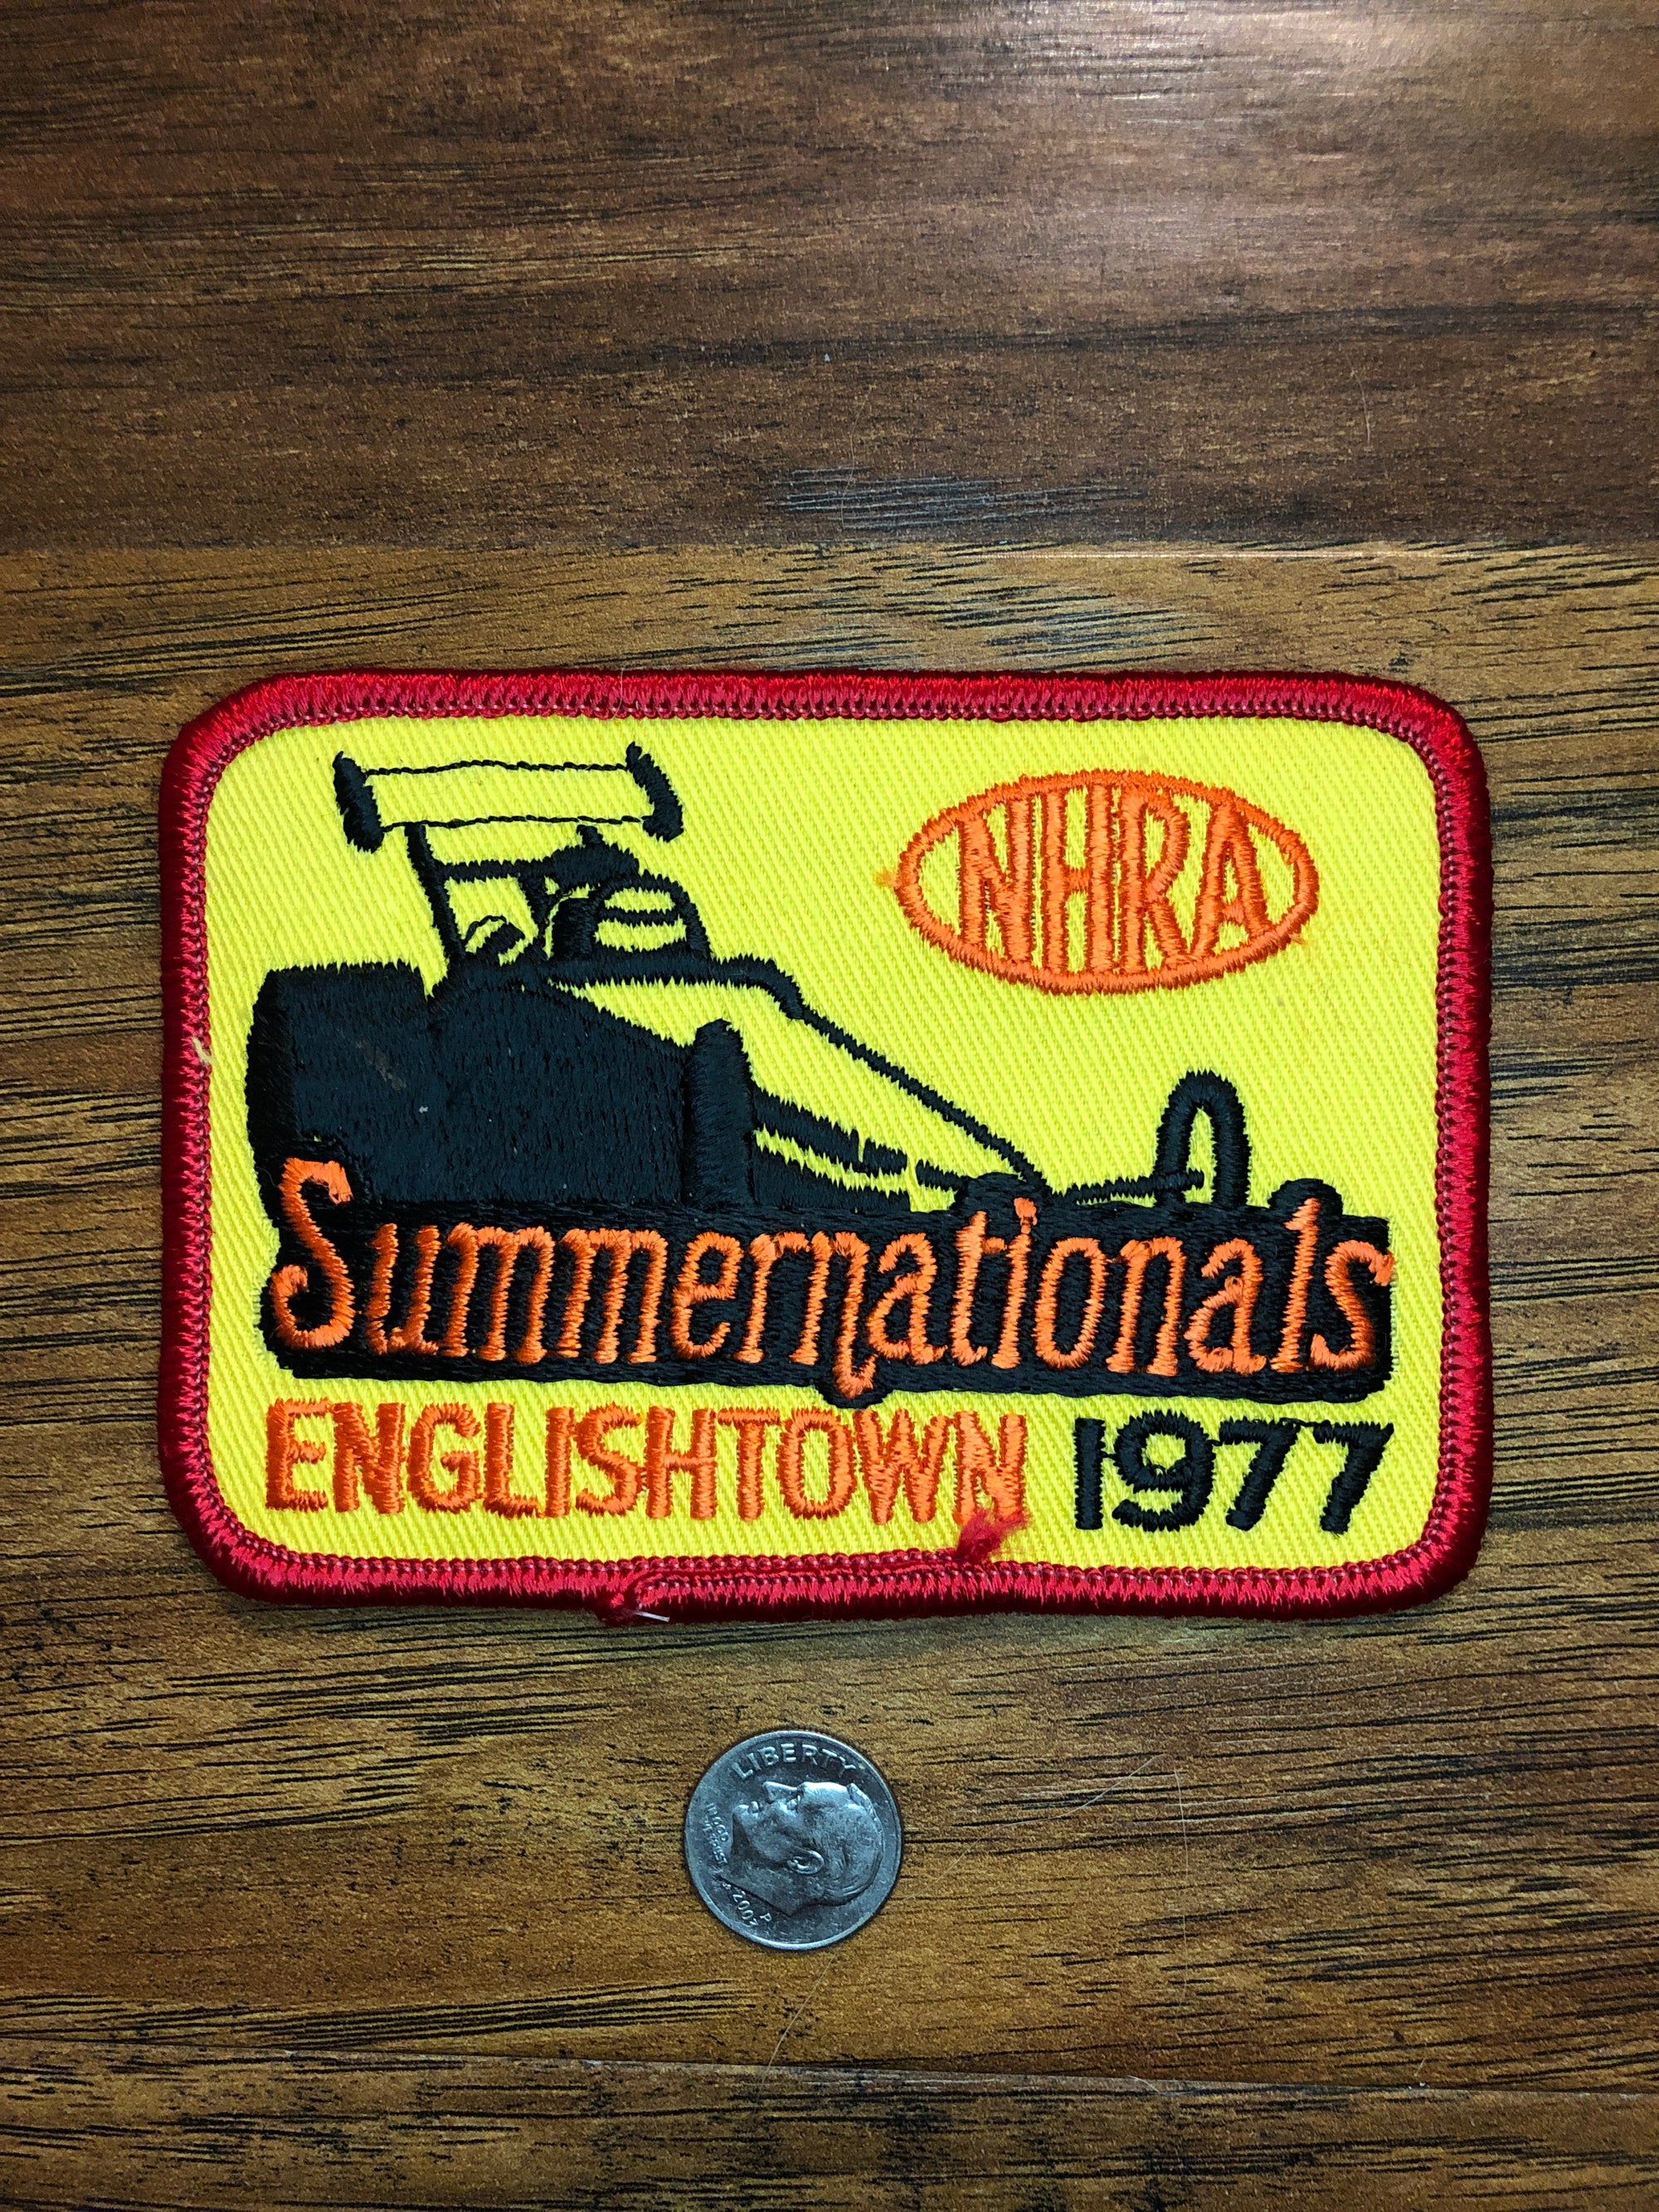 Vintage Summernationals Englishtown 1977 NHRA